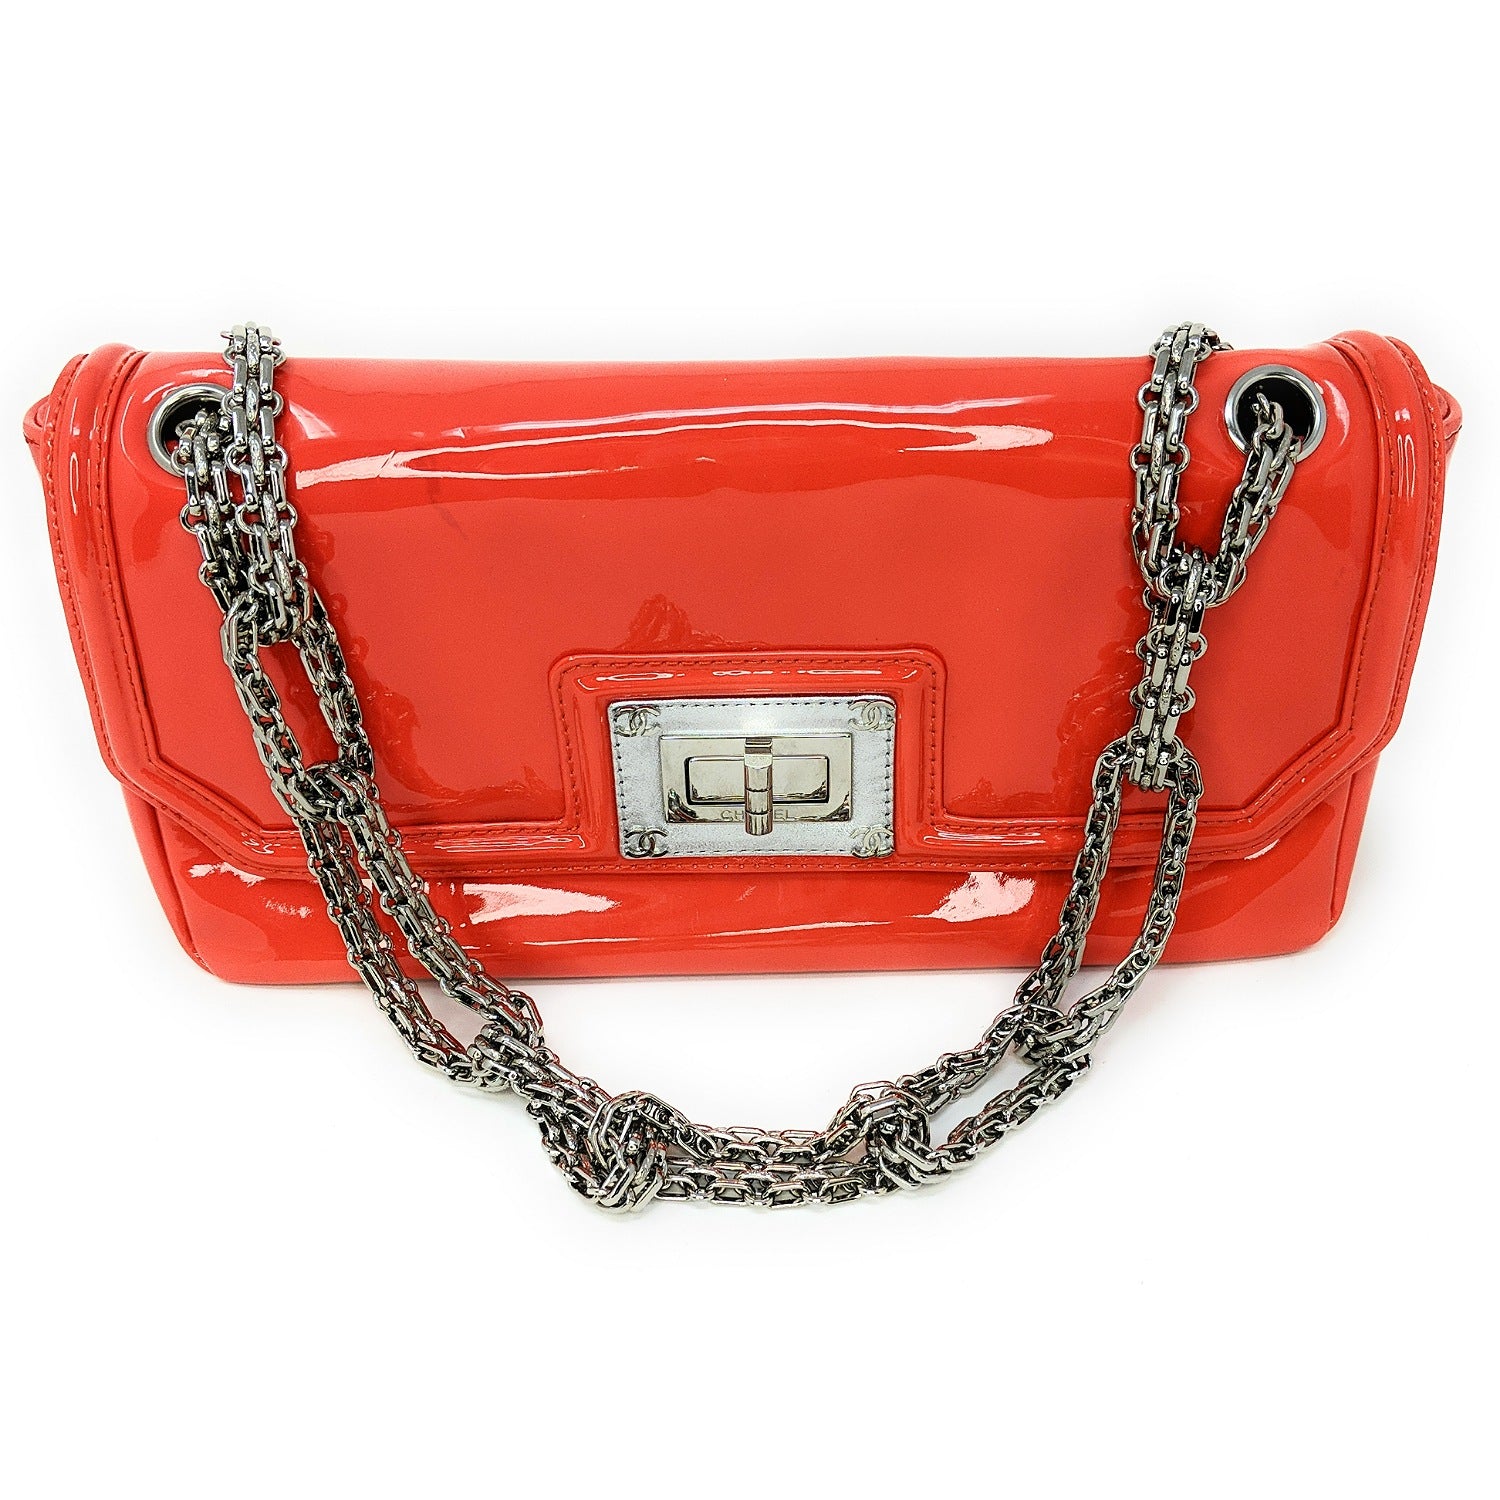 Chanel Handbags Outlet Website Store - The Lockme Chain PM handbag